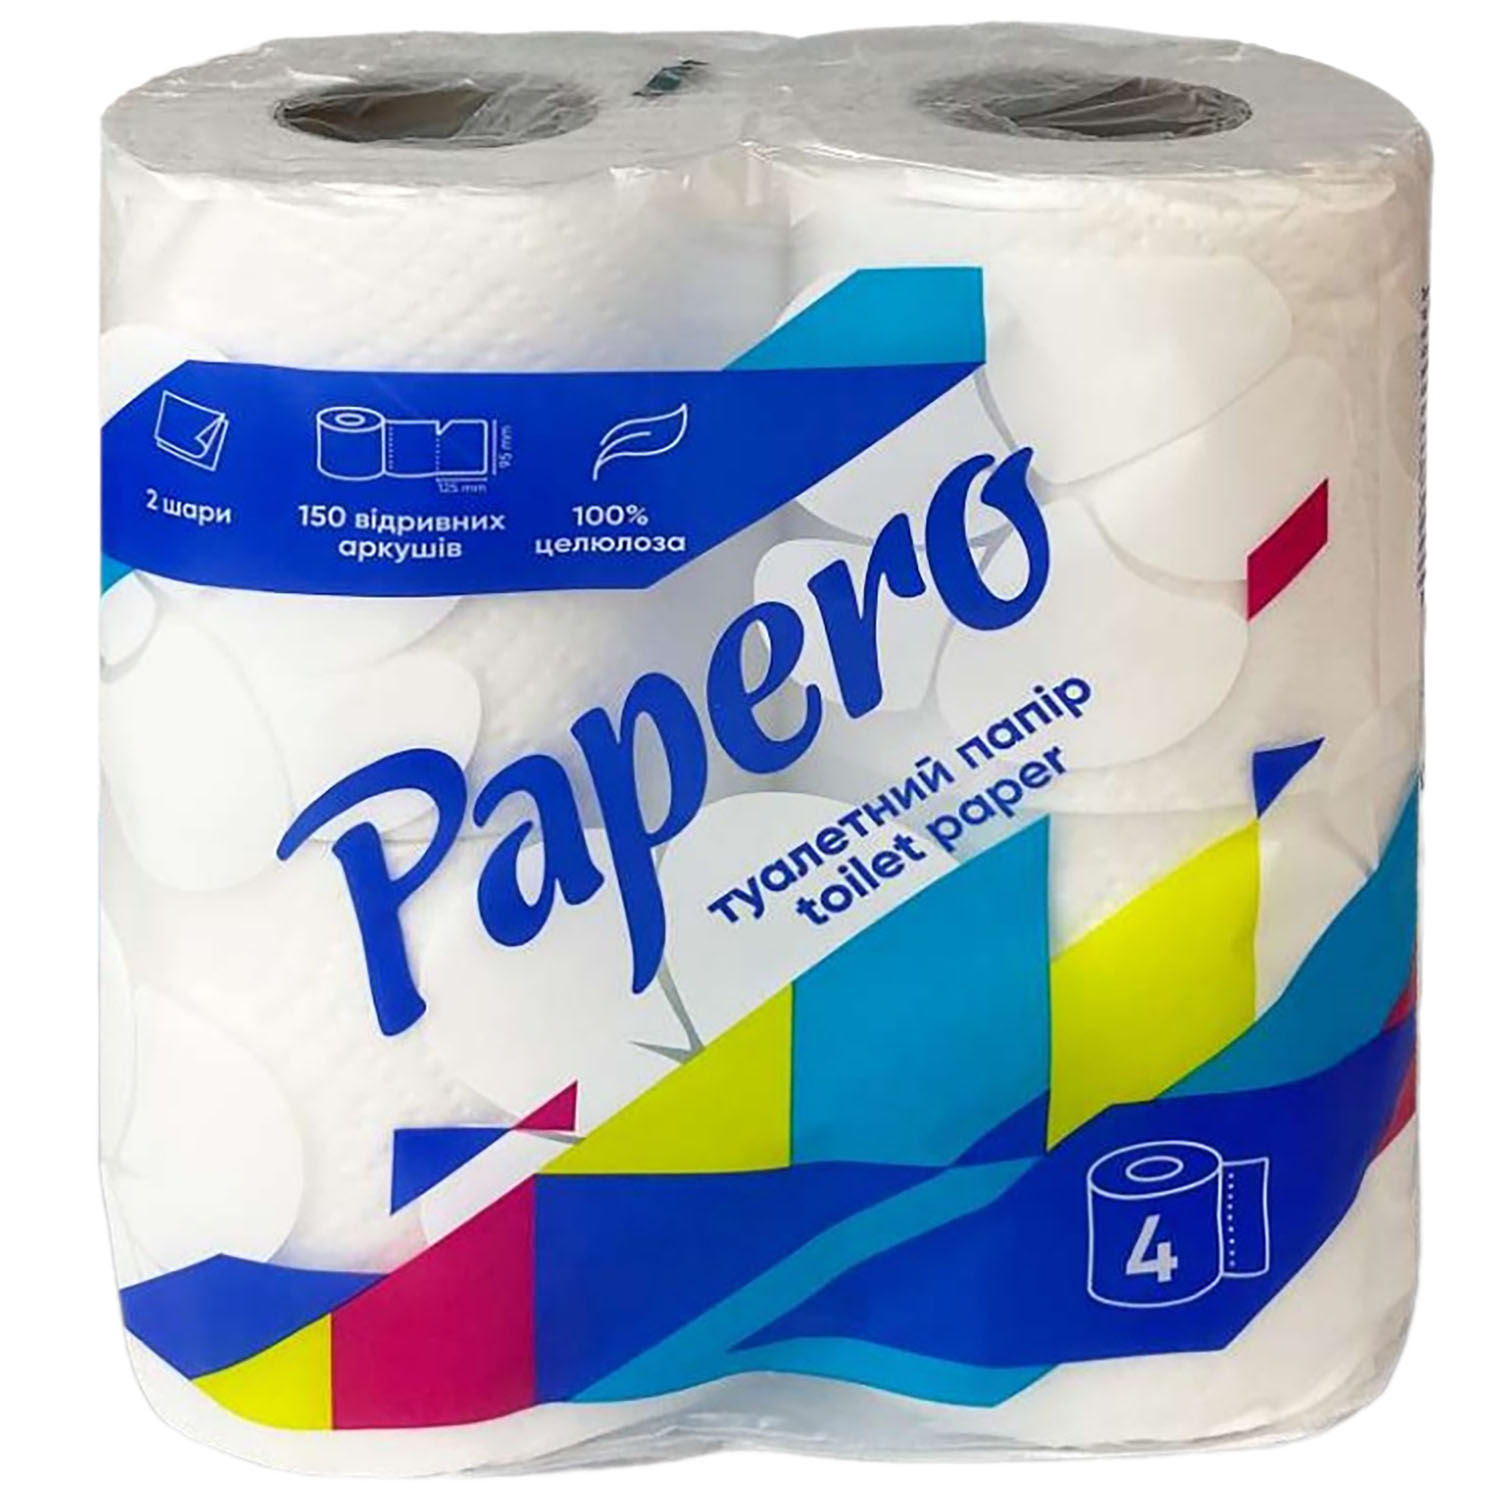 Туалетная бумага Papero 2 слойная 150 отрывов 4 шт. - фото 1